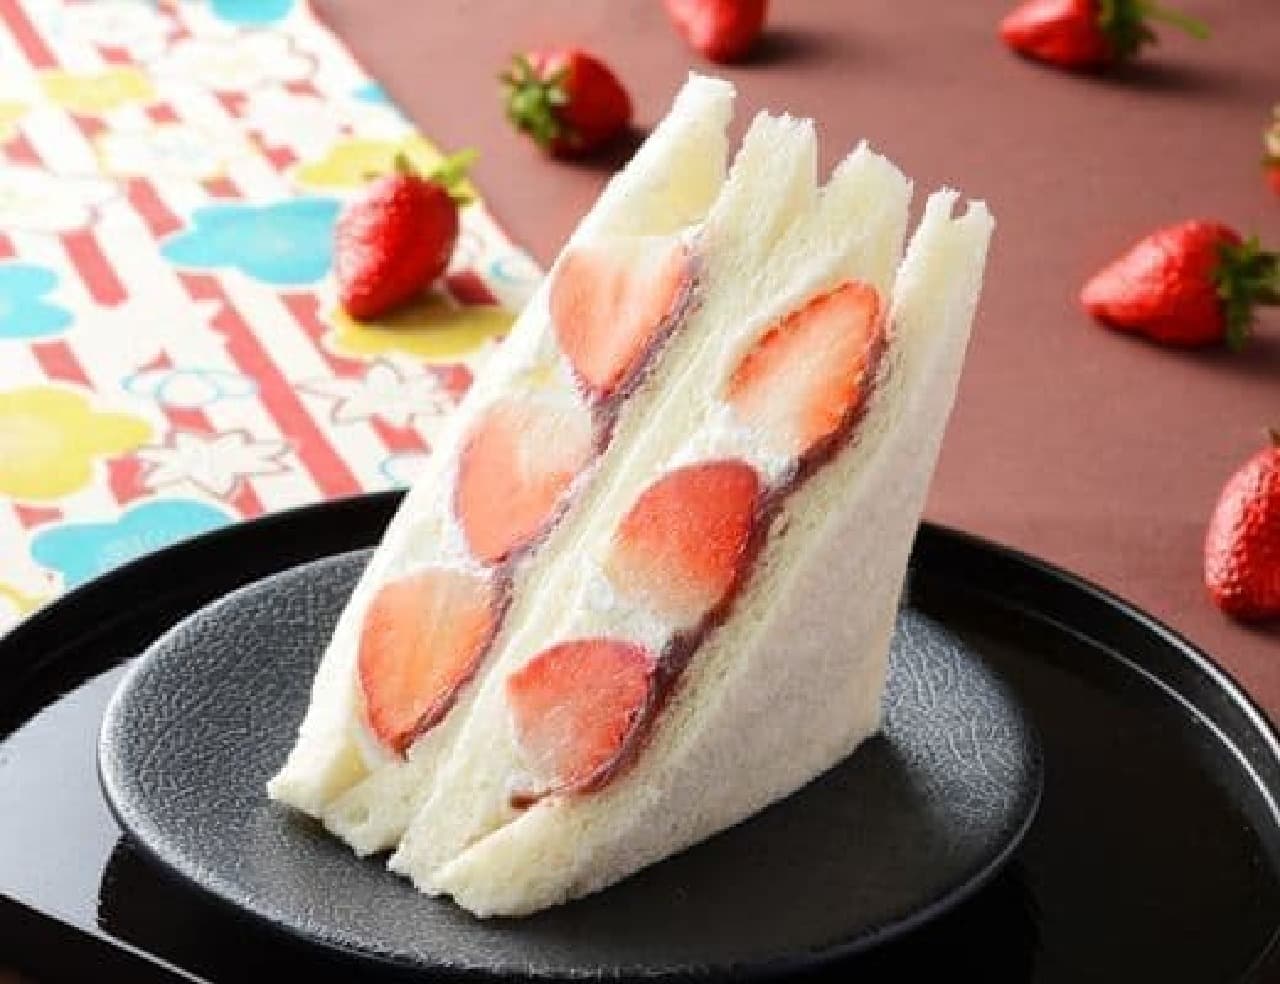 Lawson "Strawberry and Anko Japanese Sandwich"